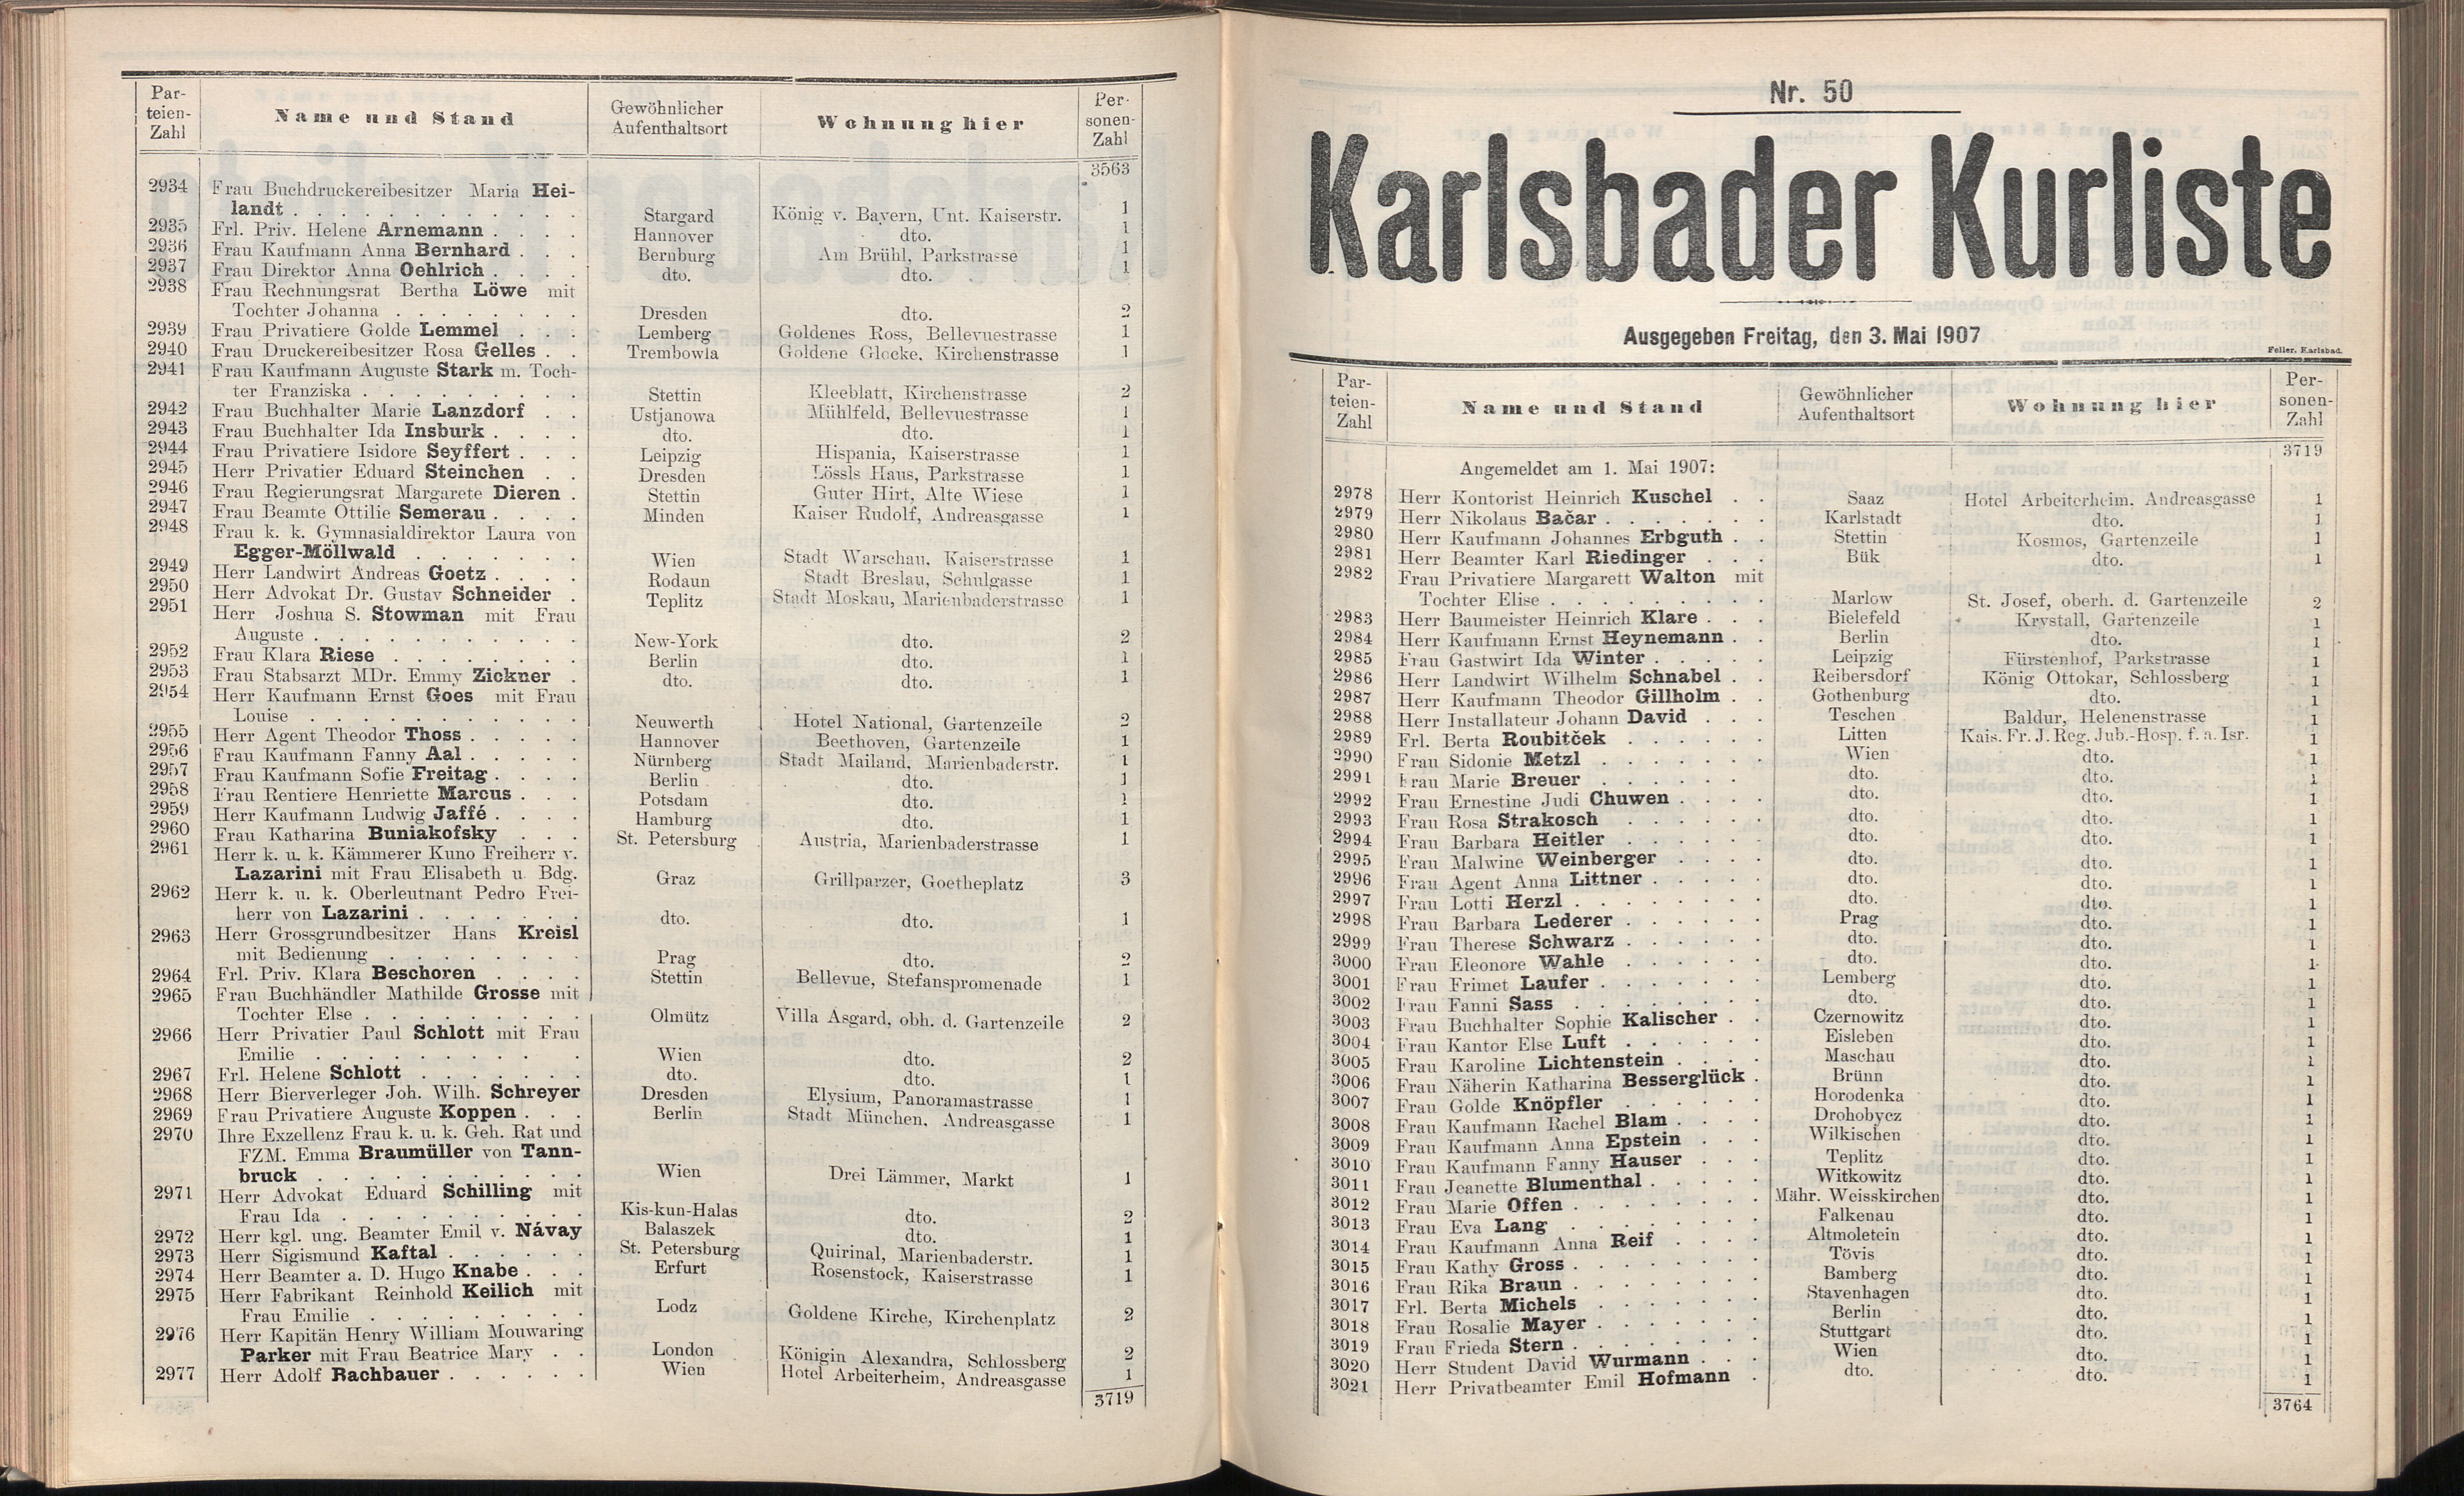 163. soap-kv_knihovna_karlsbader-kurliste-1907_1640